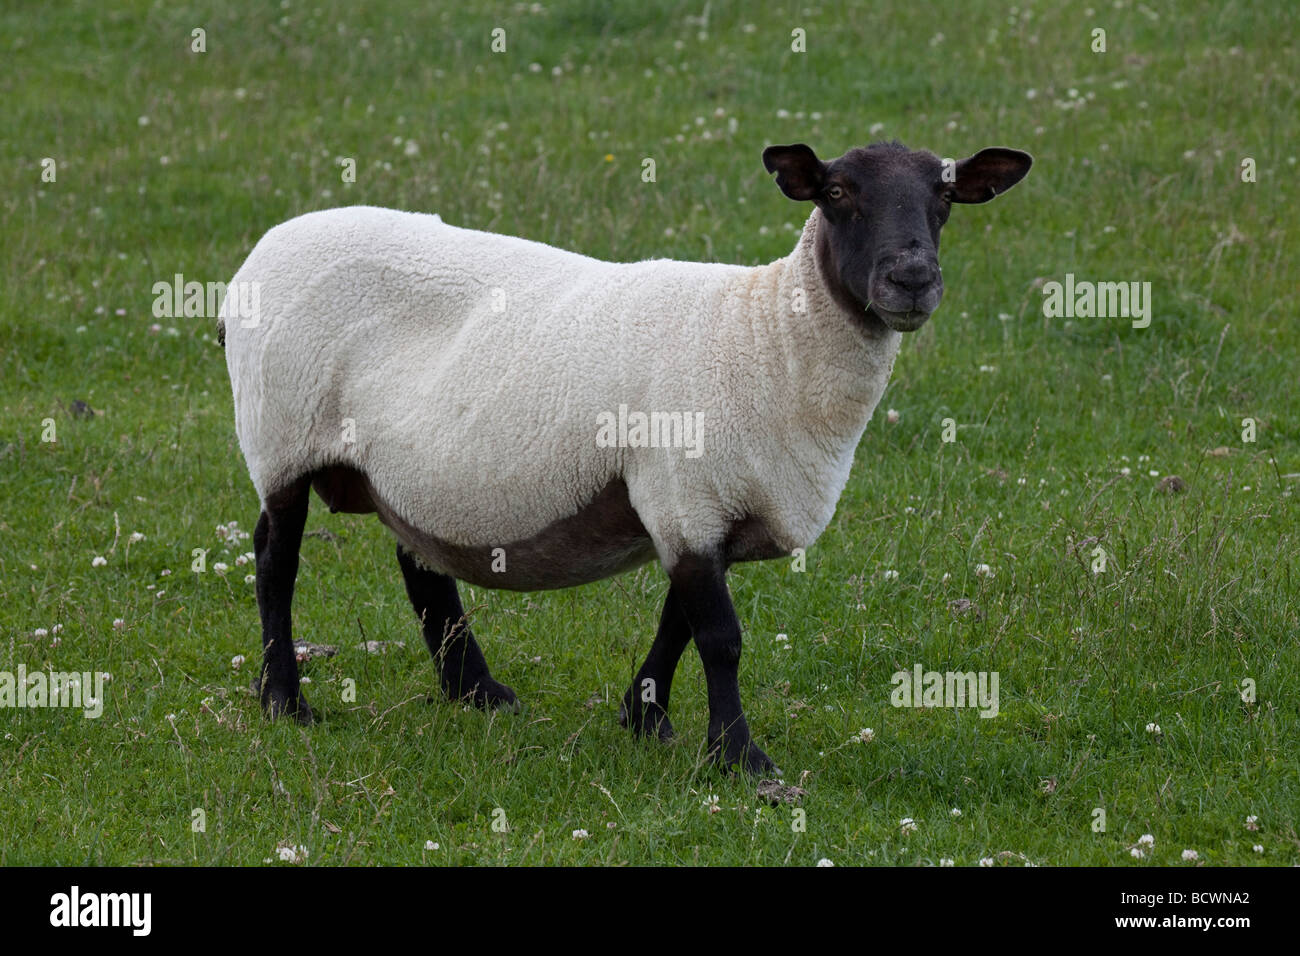 Suffolk Sheep in grass field. Northumberland. UK 97098 Sheep Stock Photo